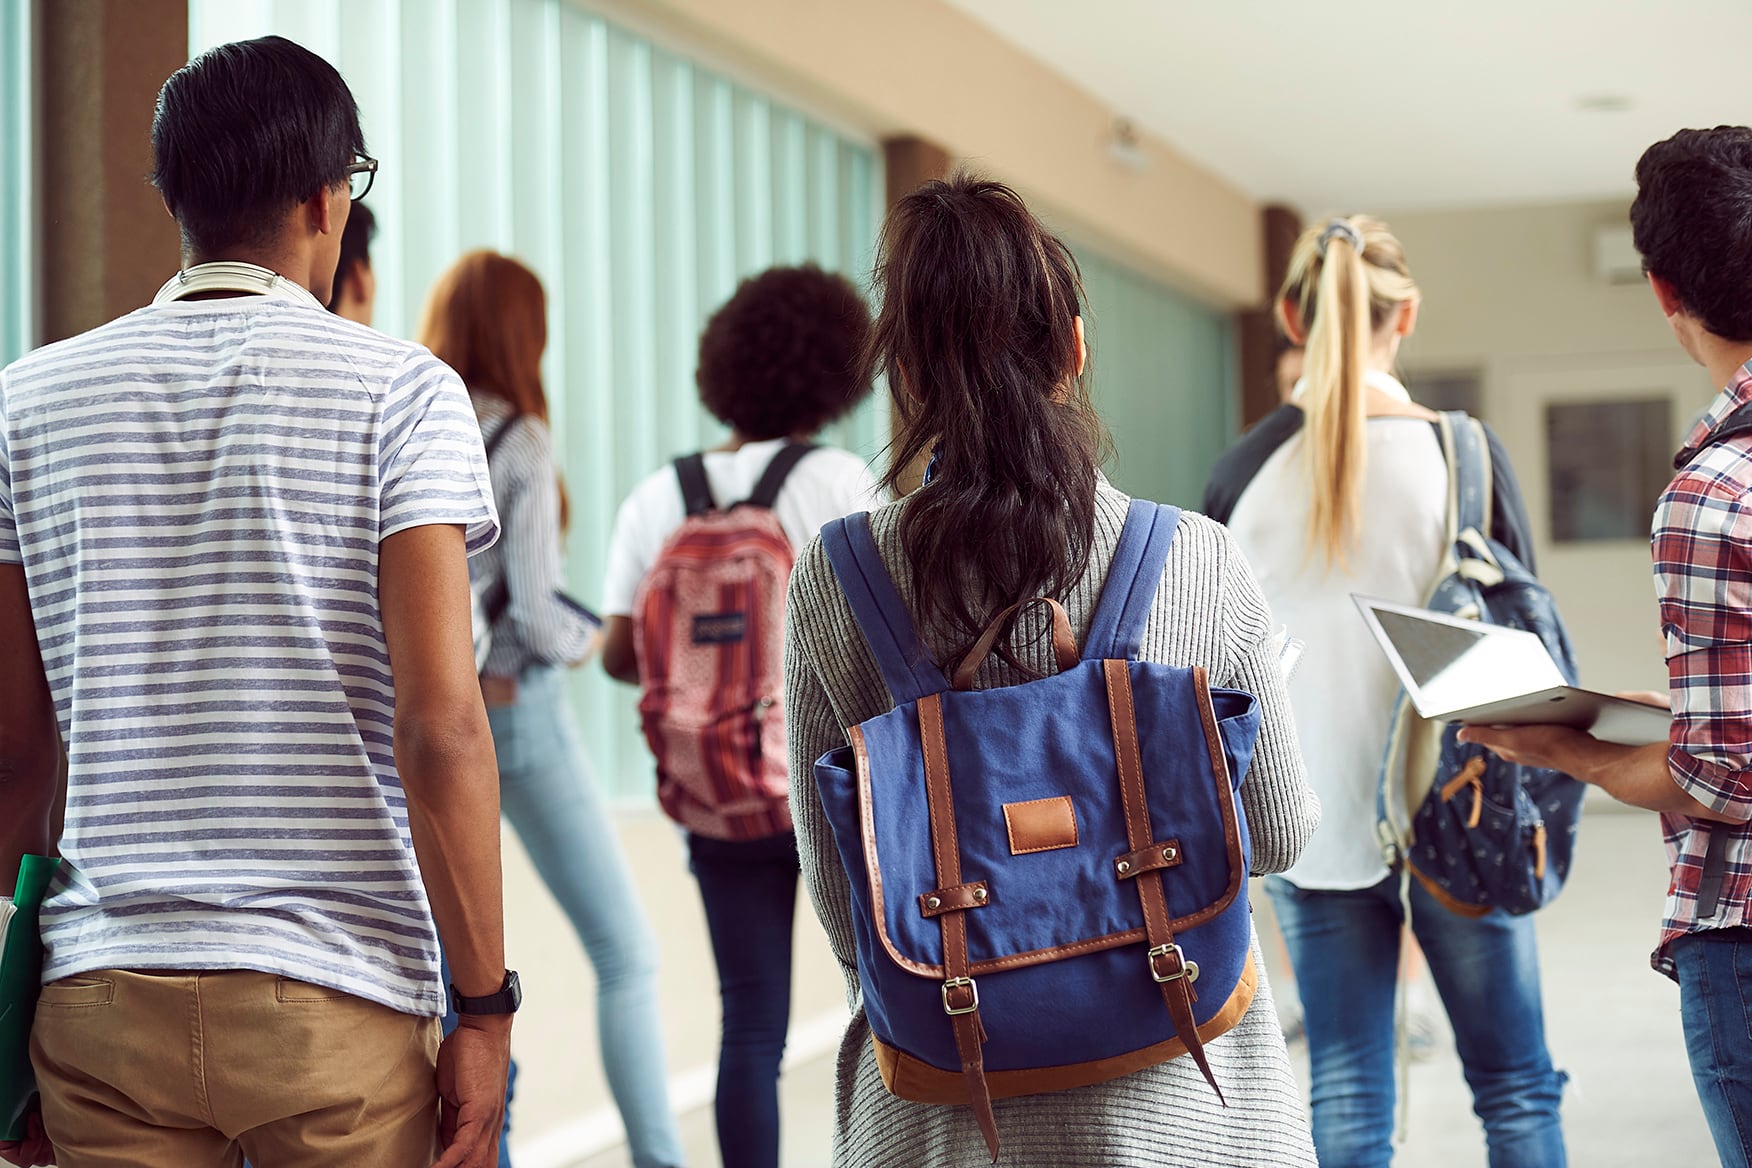 High school students wearing backpacks walk down a school hallway.